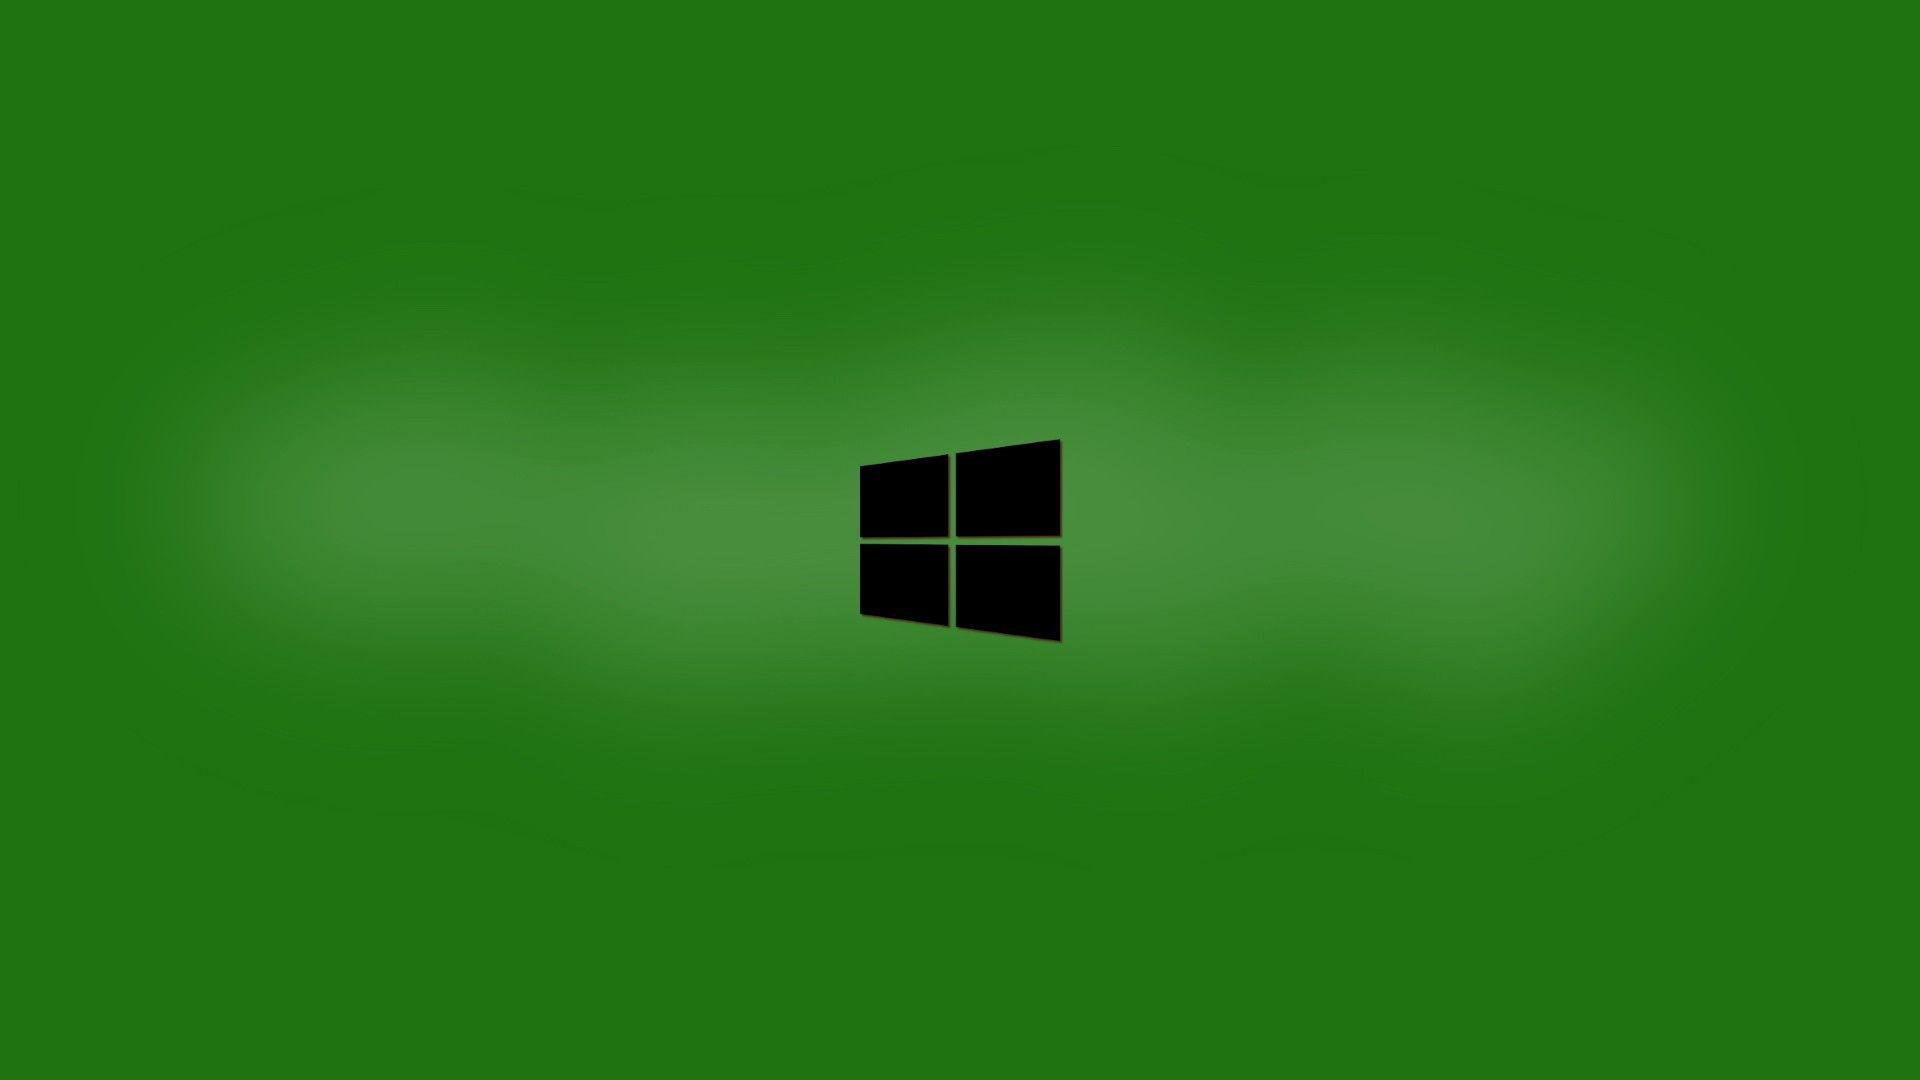 New Wallpaper Hd For Pc Windows 10 Windows 10 Wallpaper 1680x1050